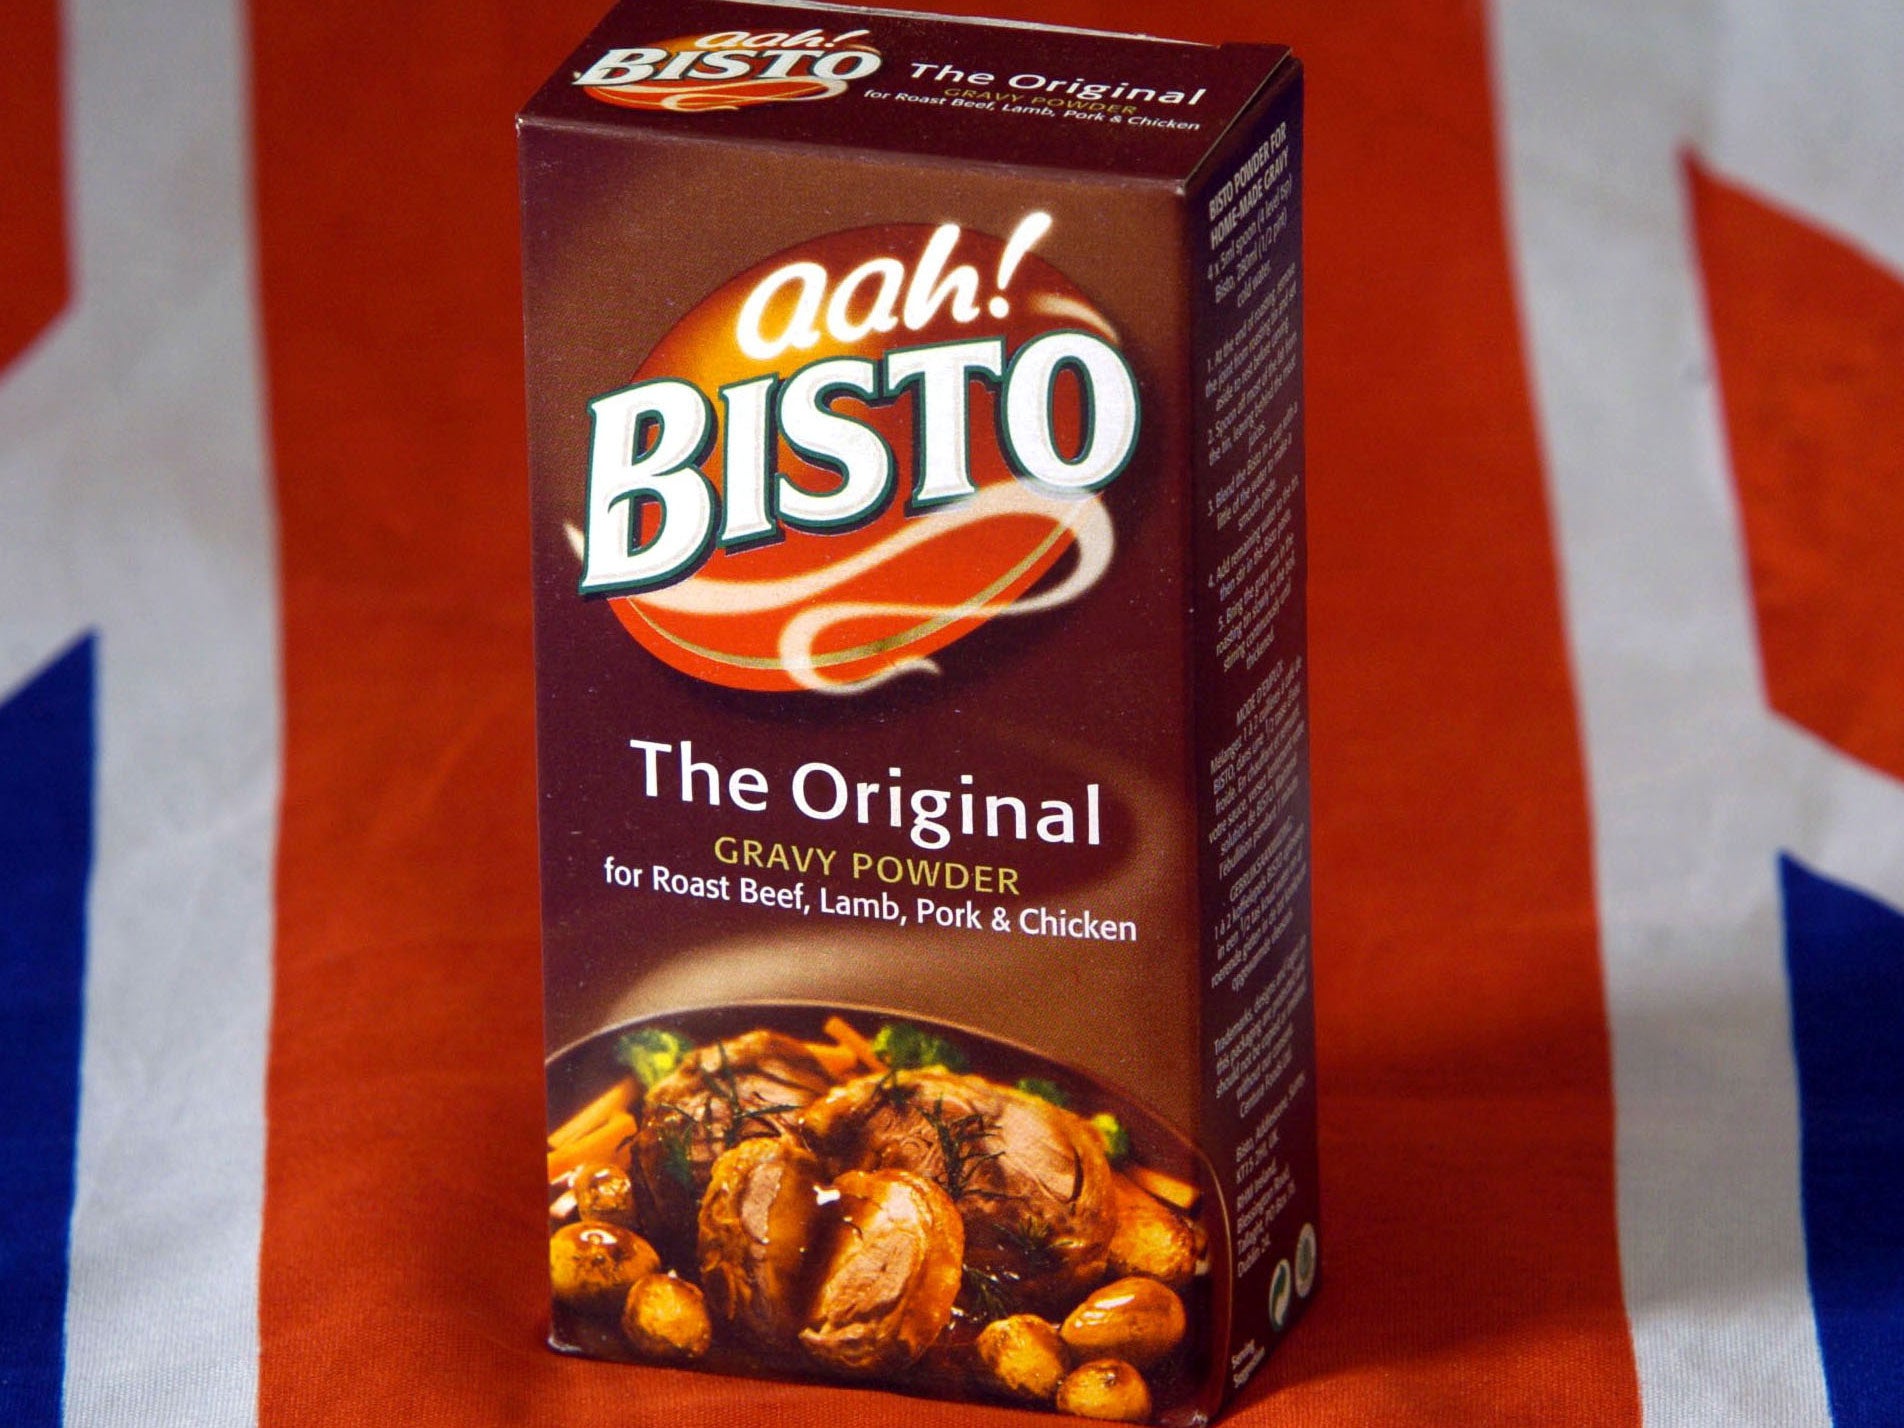 Aah! Bisto maker Premier Foods has stirred up a tasty pensions deal